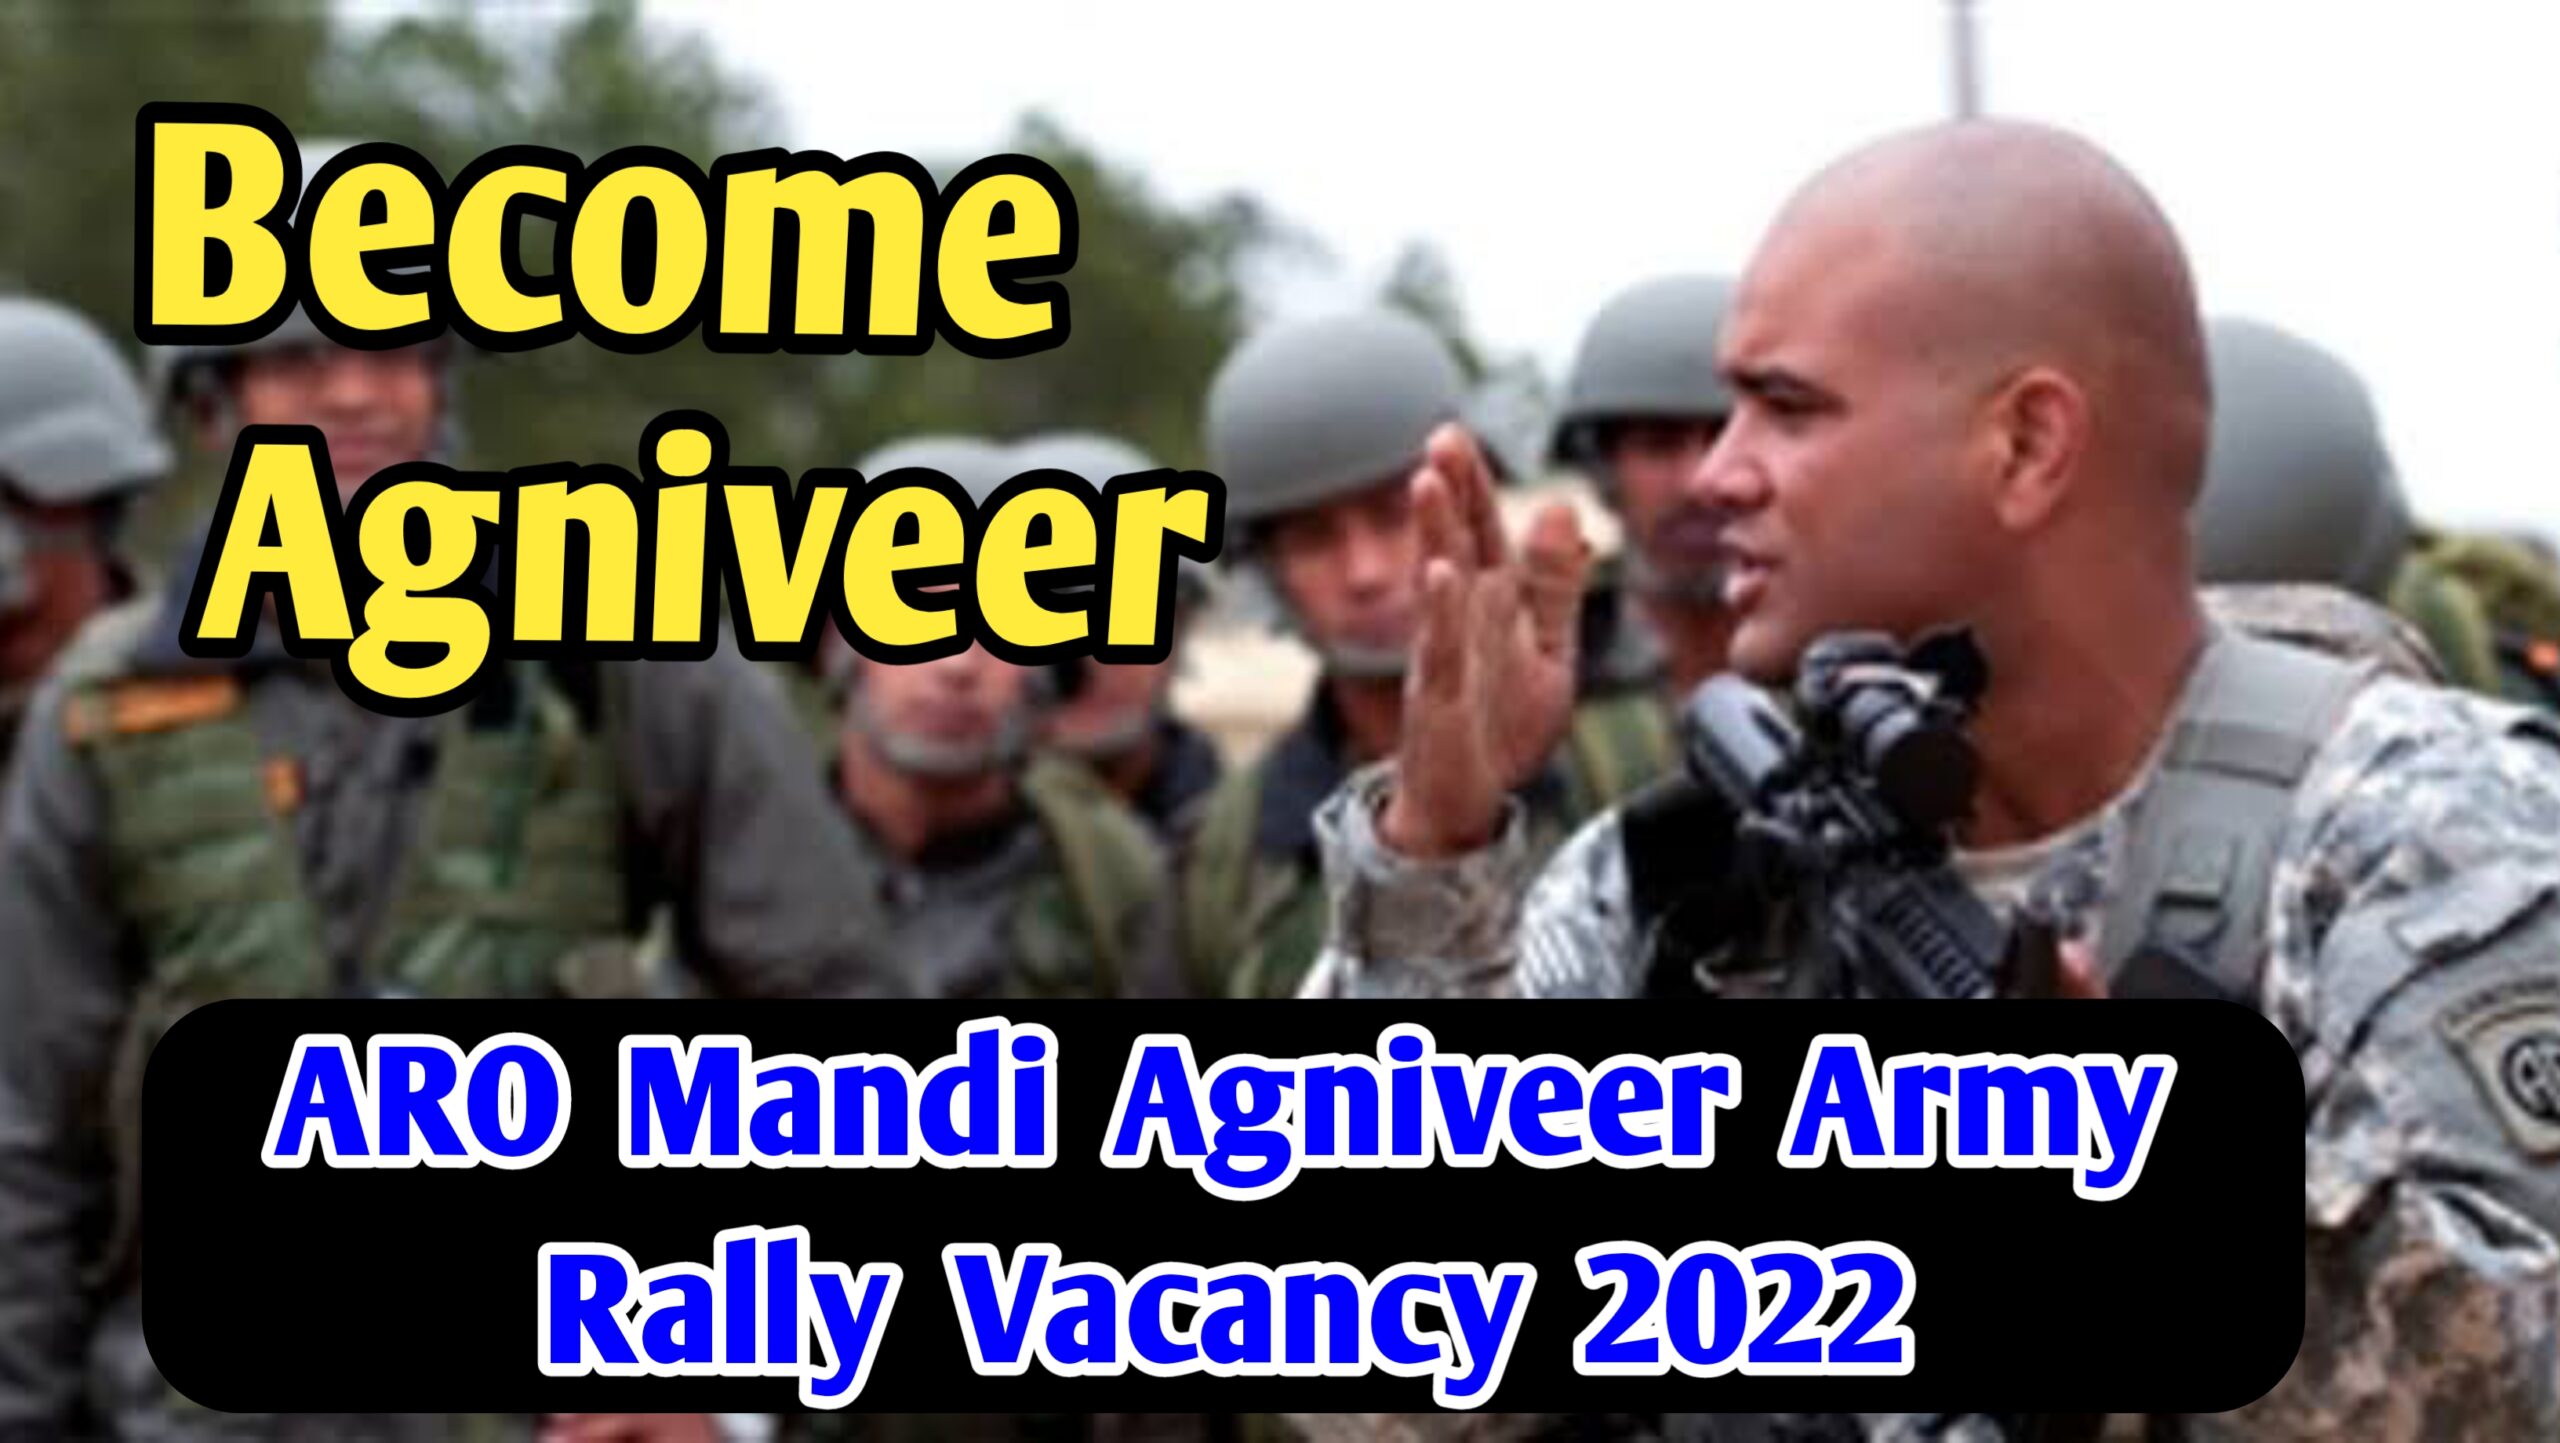 ARO Mandi Agniveer Army Rally Vacancy 2022